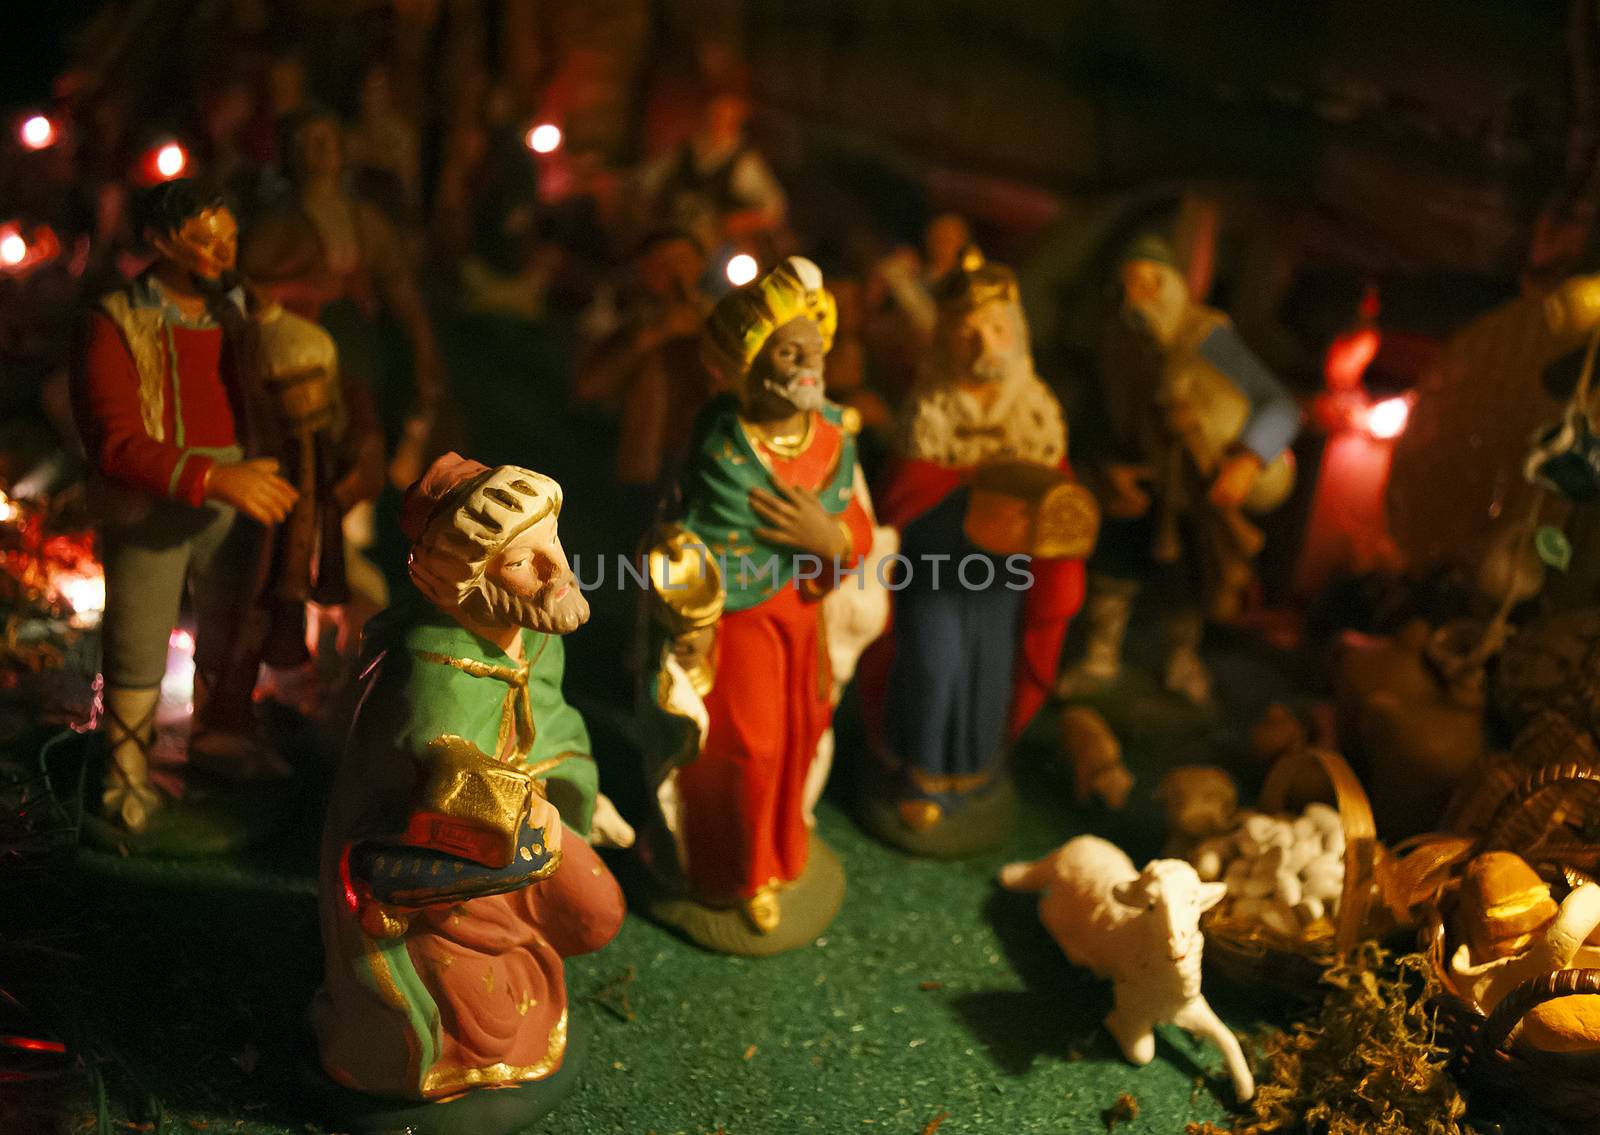 Christmas nativity scene with the Three Wise Men by rarrarorro